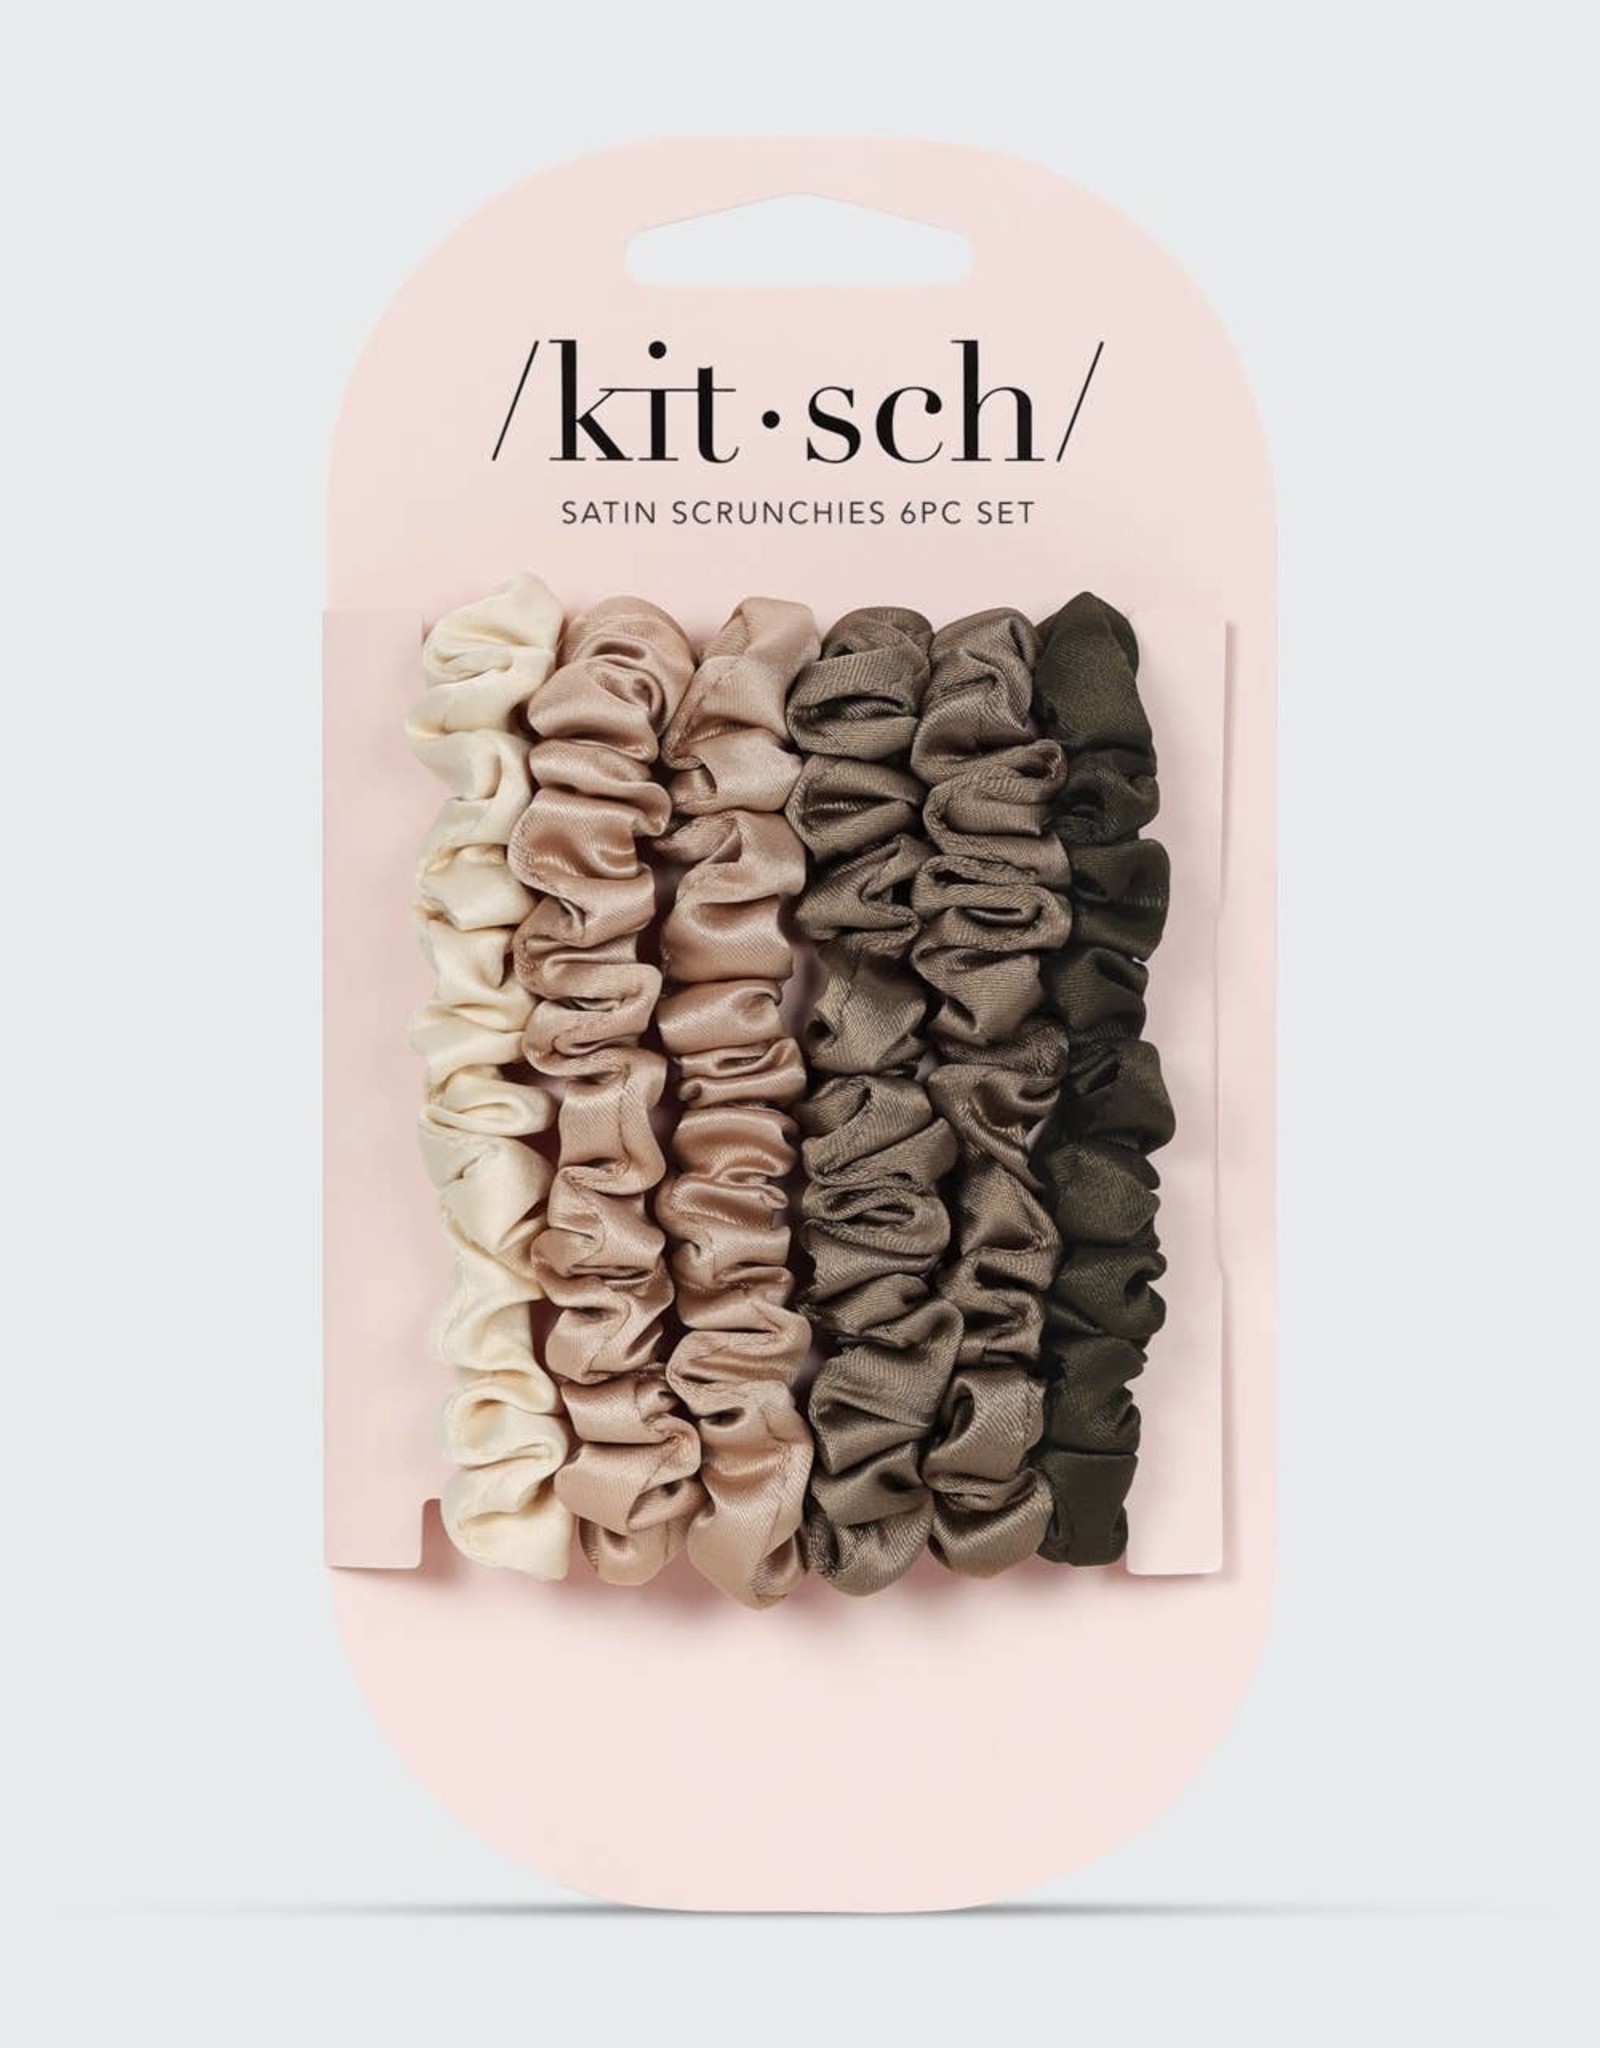 Kitsch Ultra Petite Satin Scrunchies 6pc